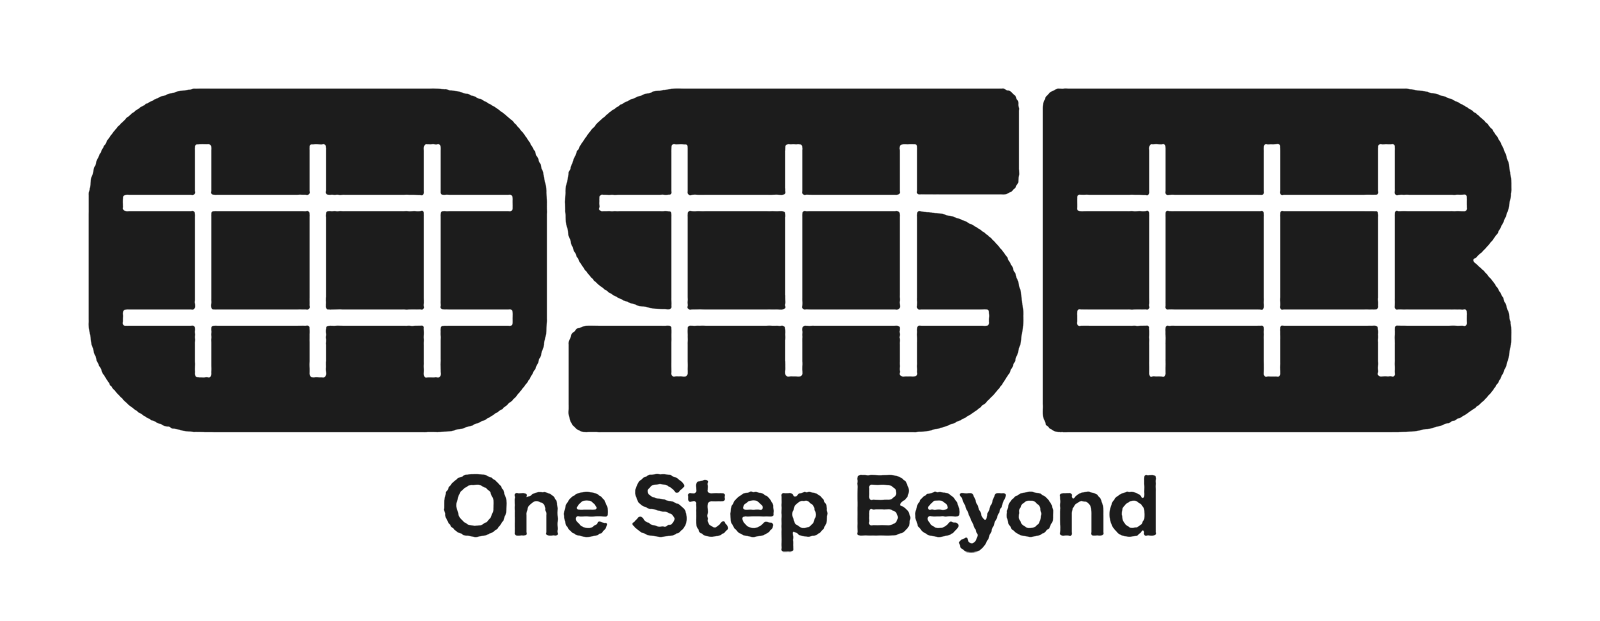 ONE STEP BEYOND (2017)